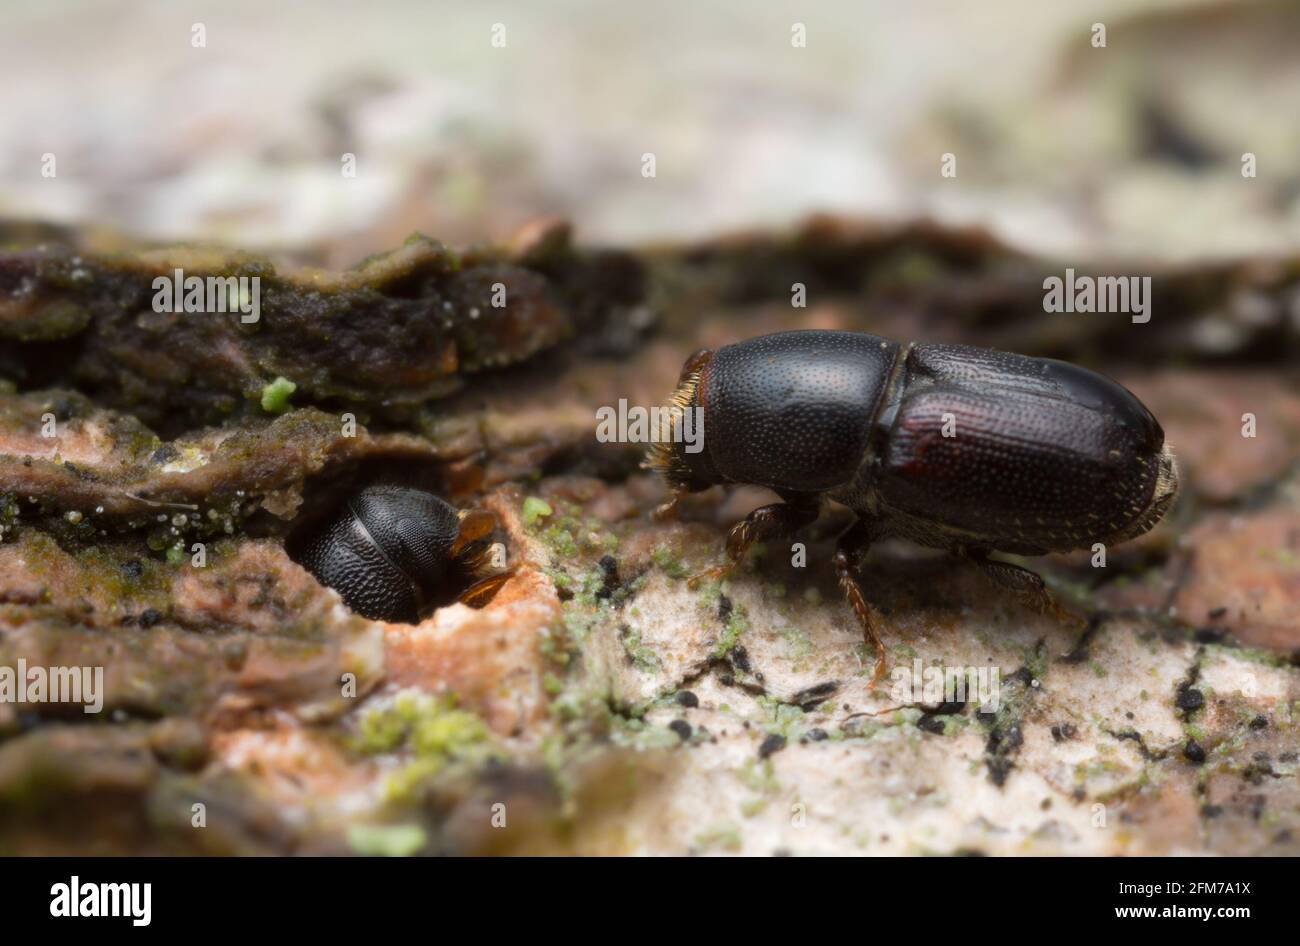 White beech bark beetles, Scolytus carpini on wood Stock Photo